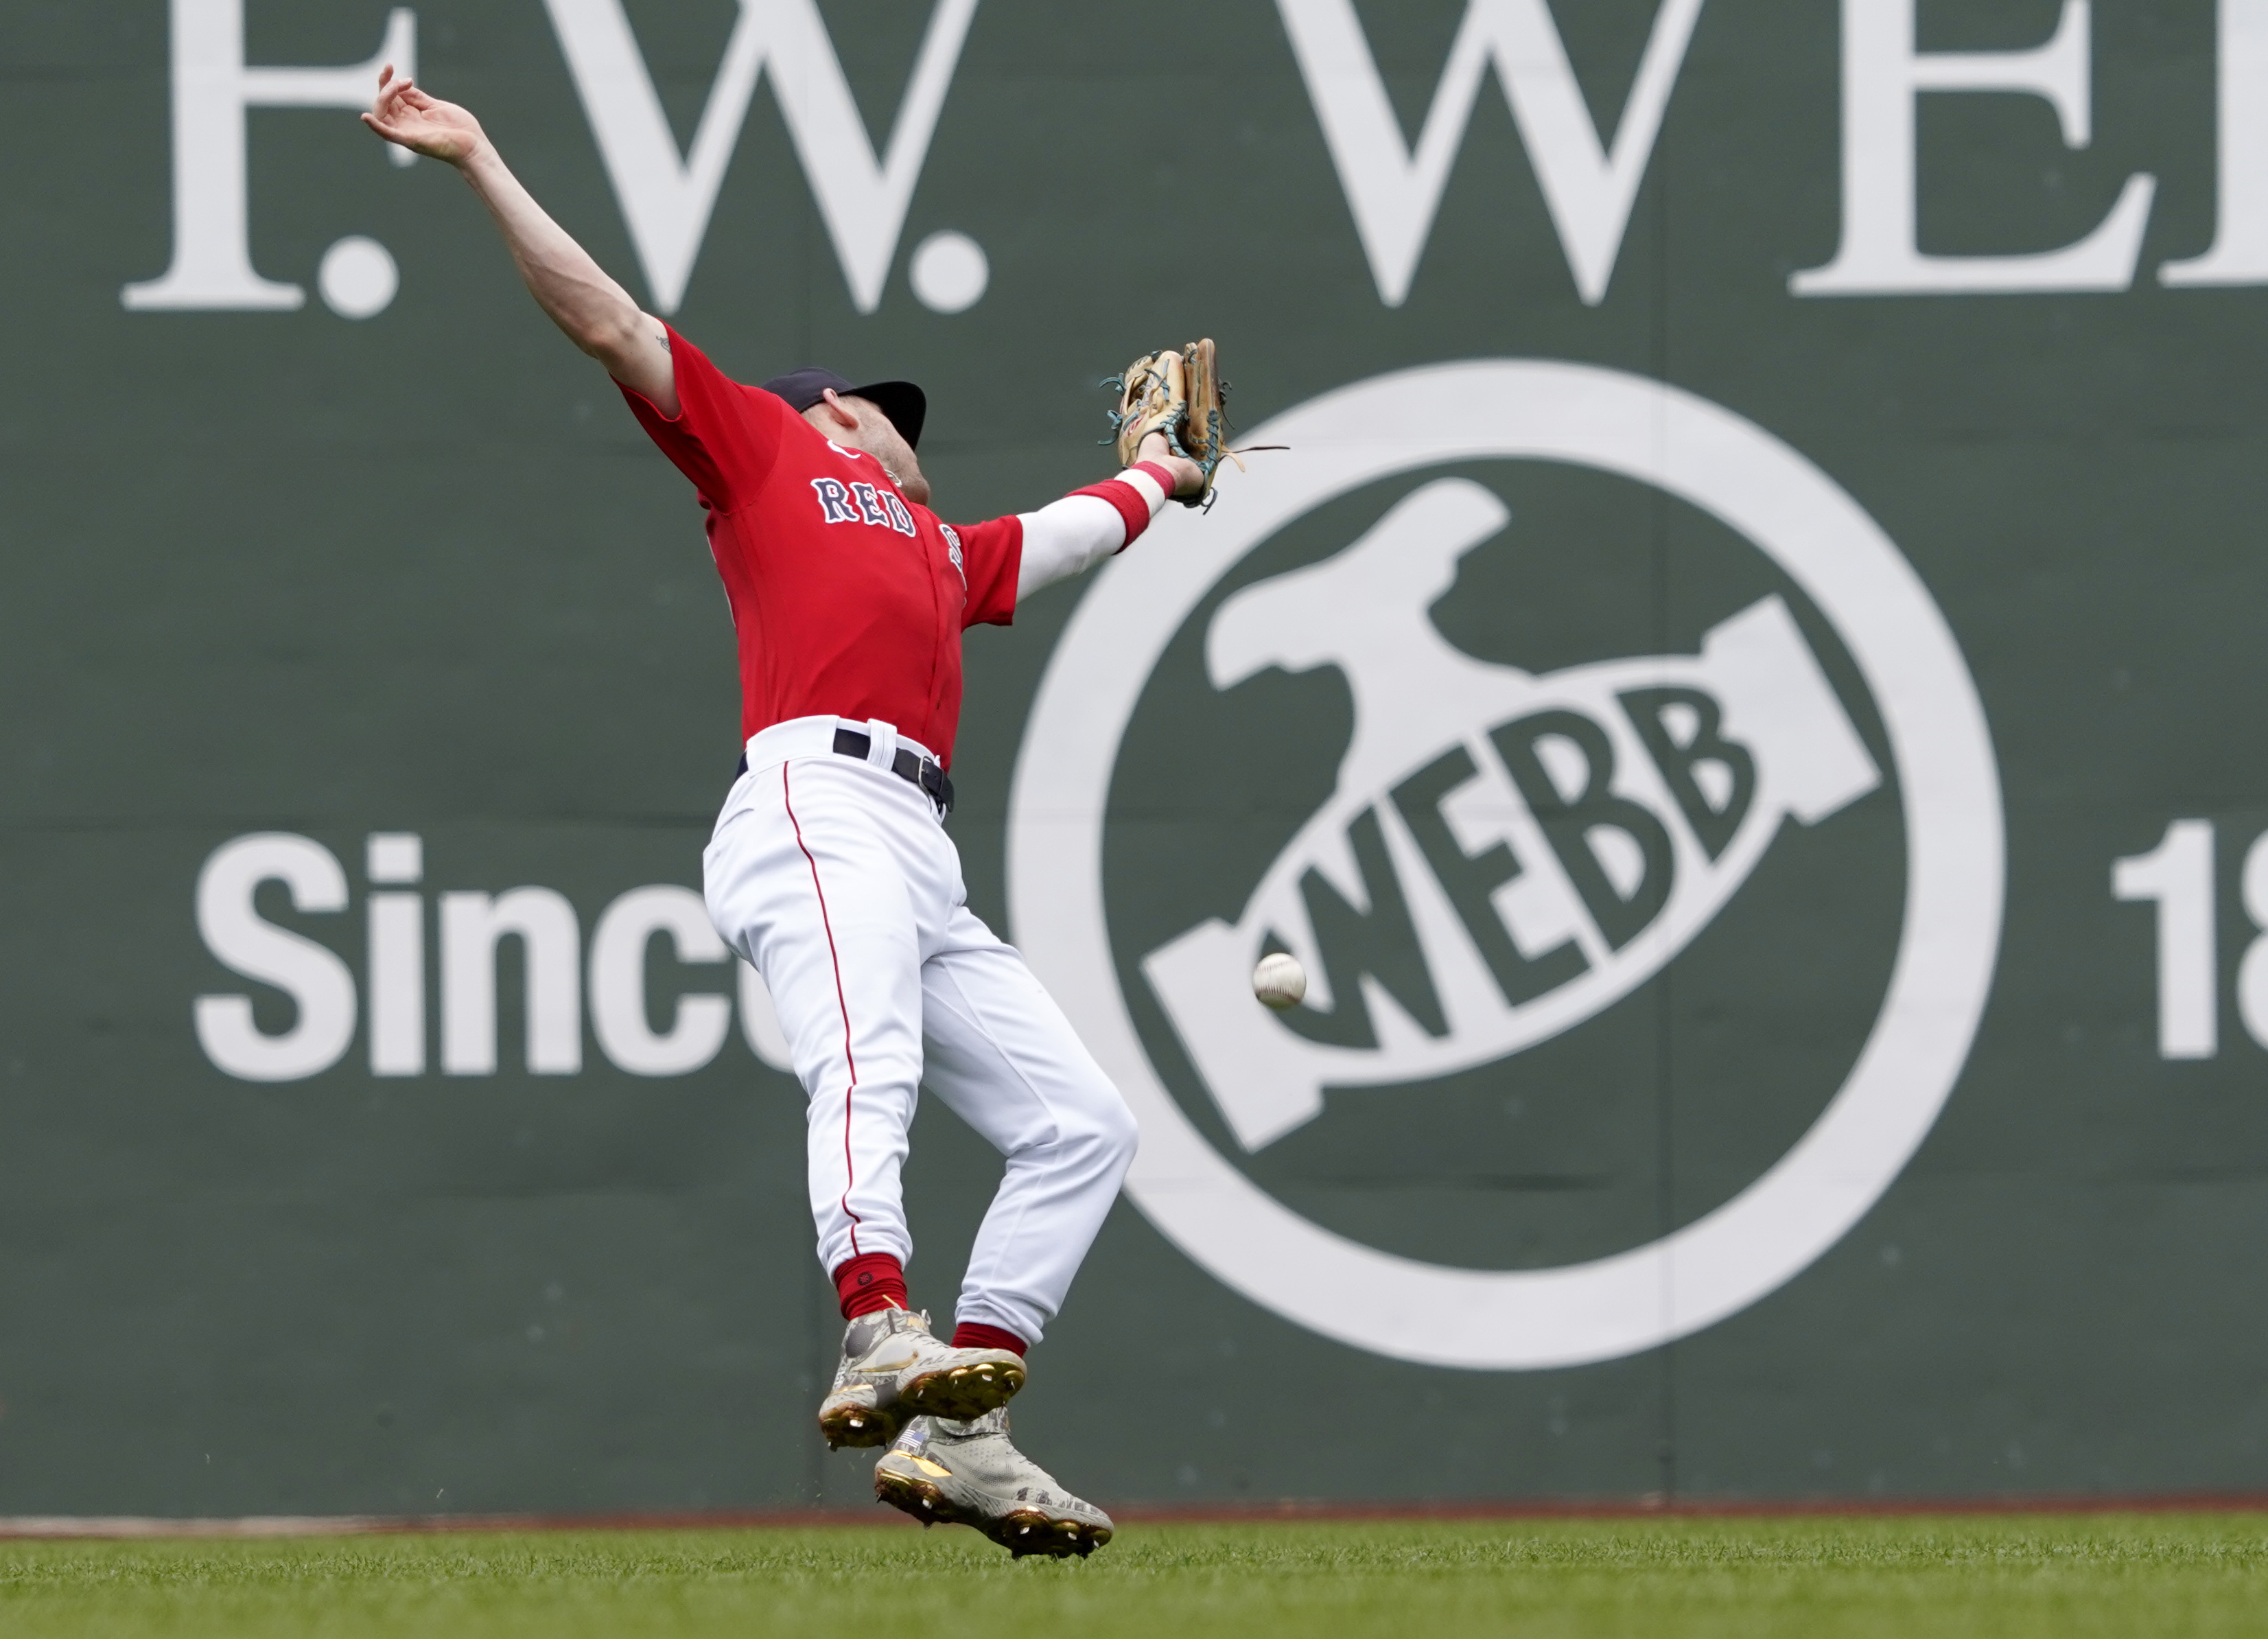 Red Sox's fastest prospect 'glides' unlike Jarren Duran who's 'a lizard  running on water' 